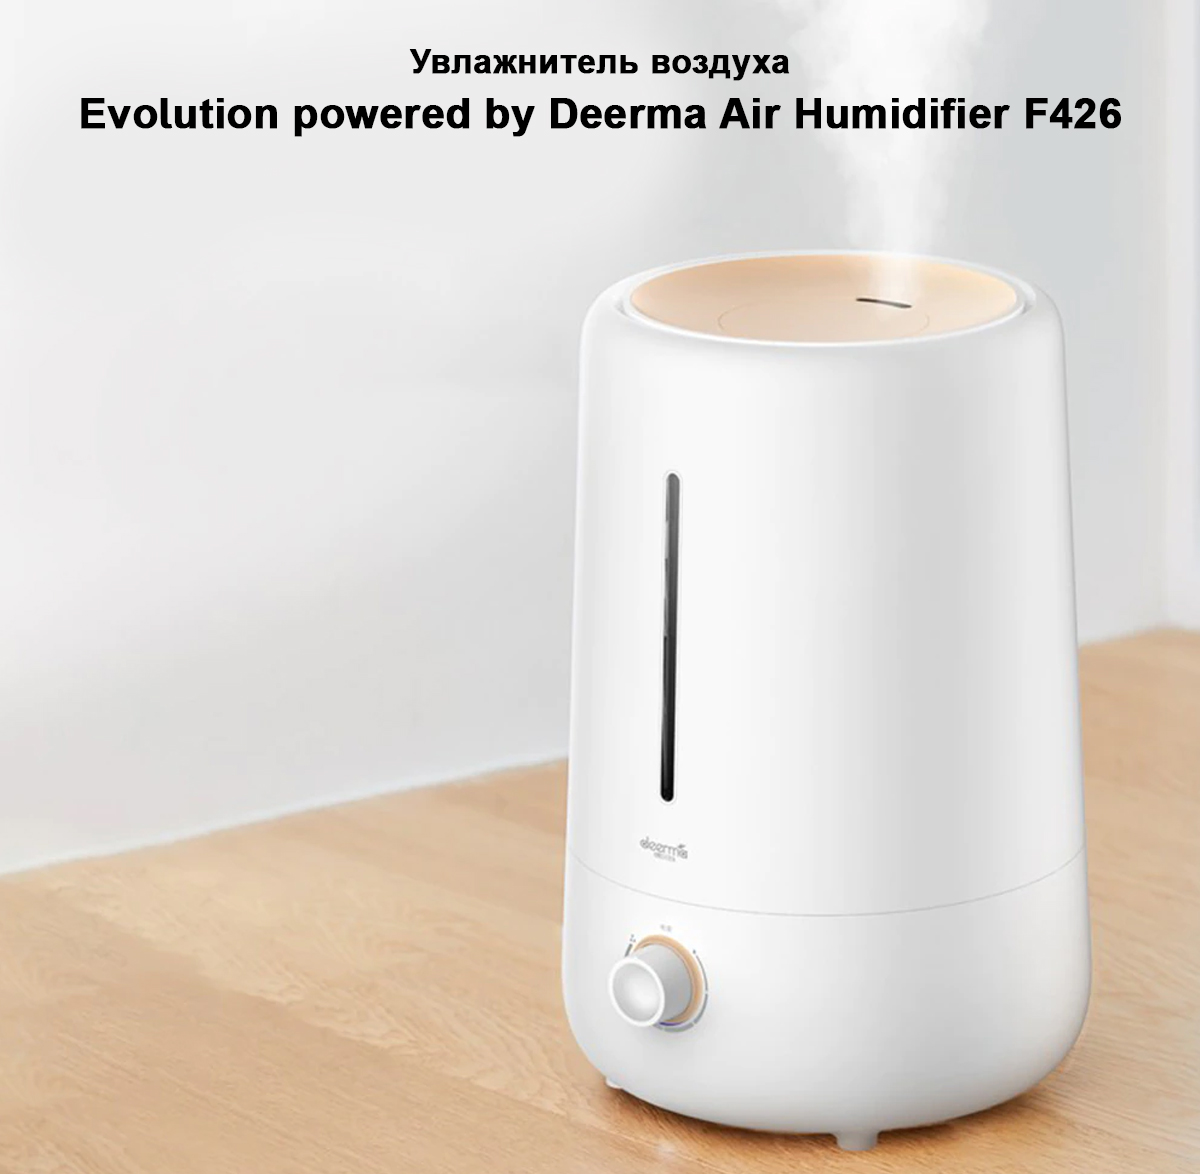 Увлажнитель воздуха Evolution powered by Deerma Air Humidifier F426